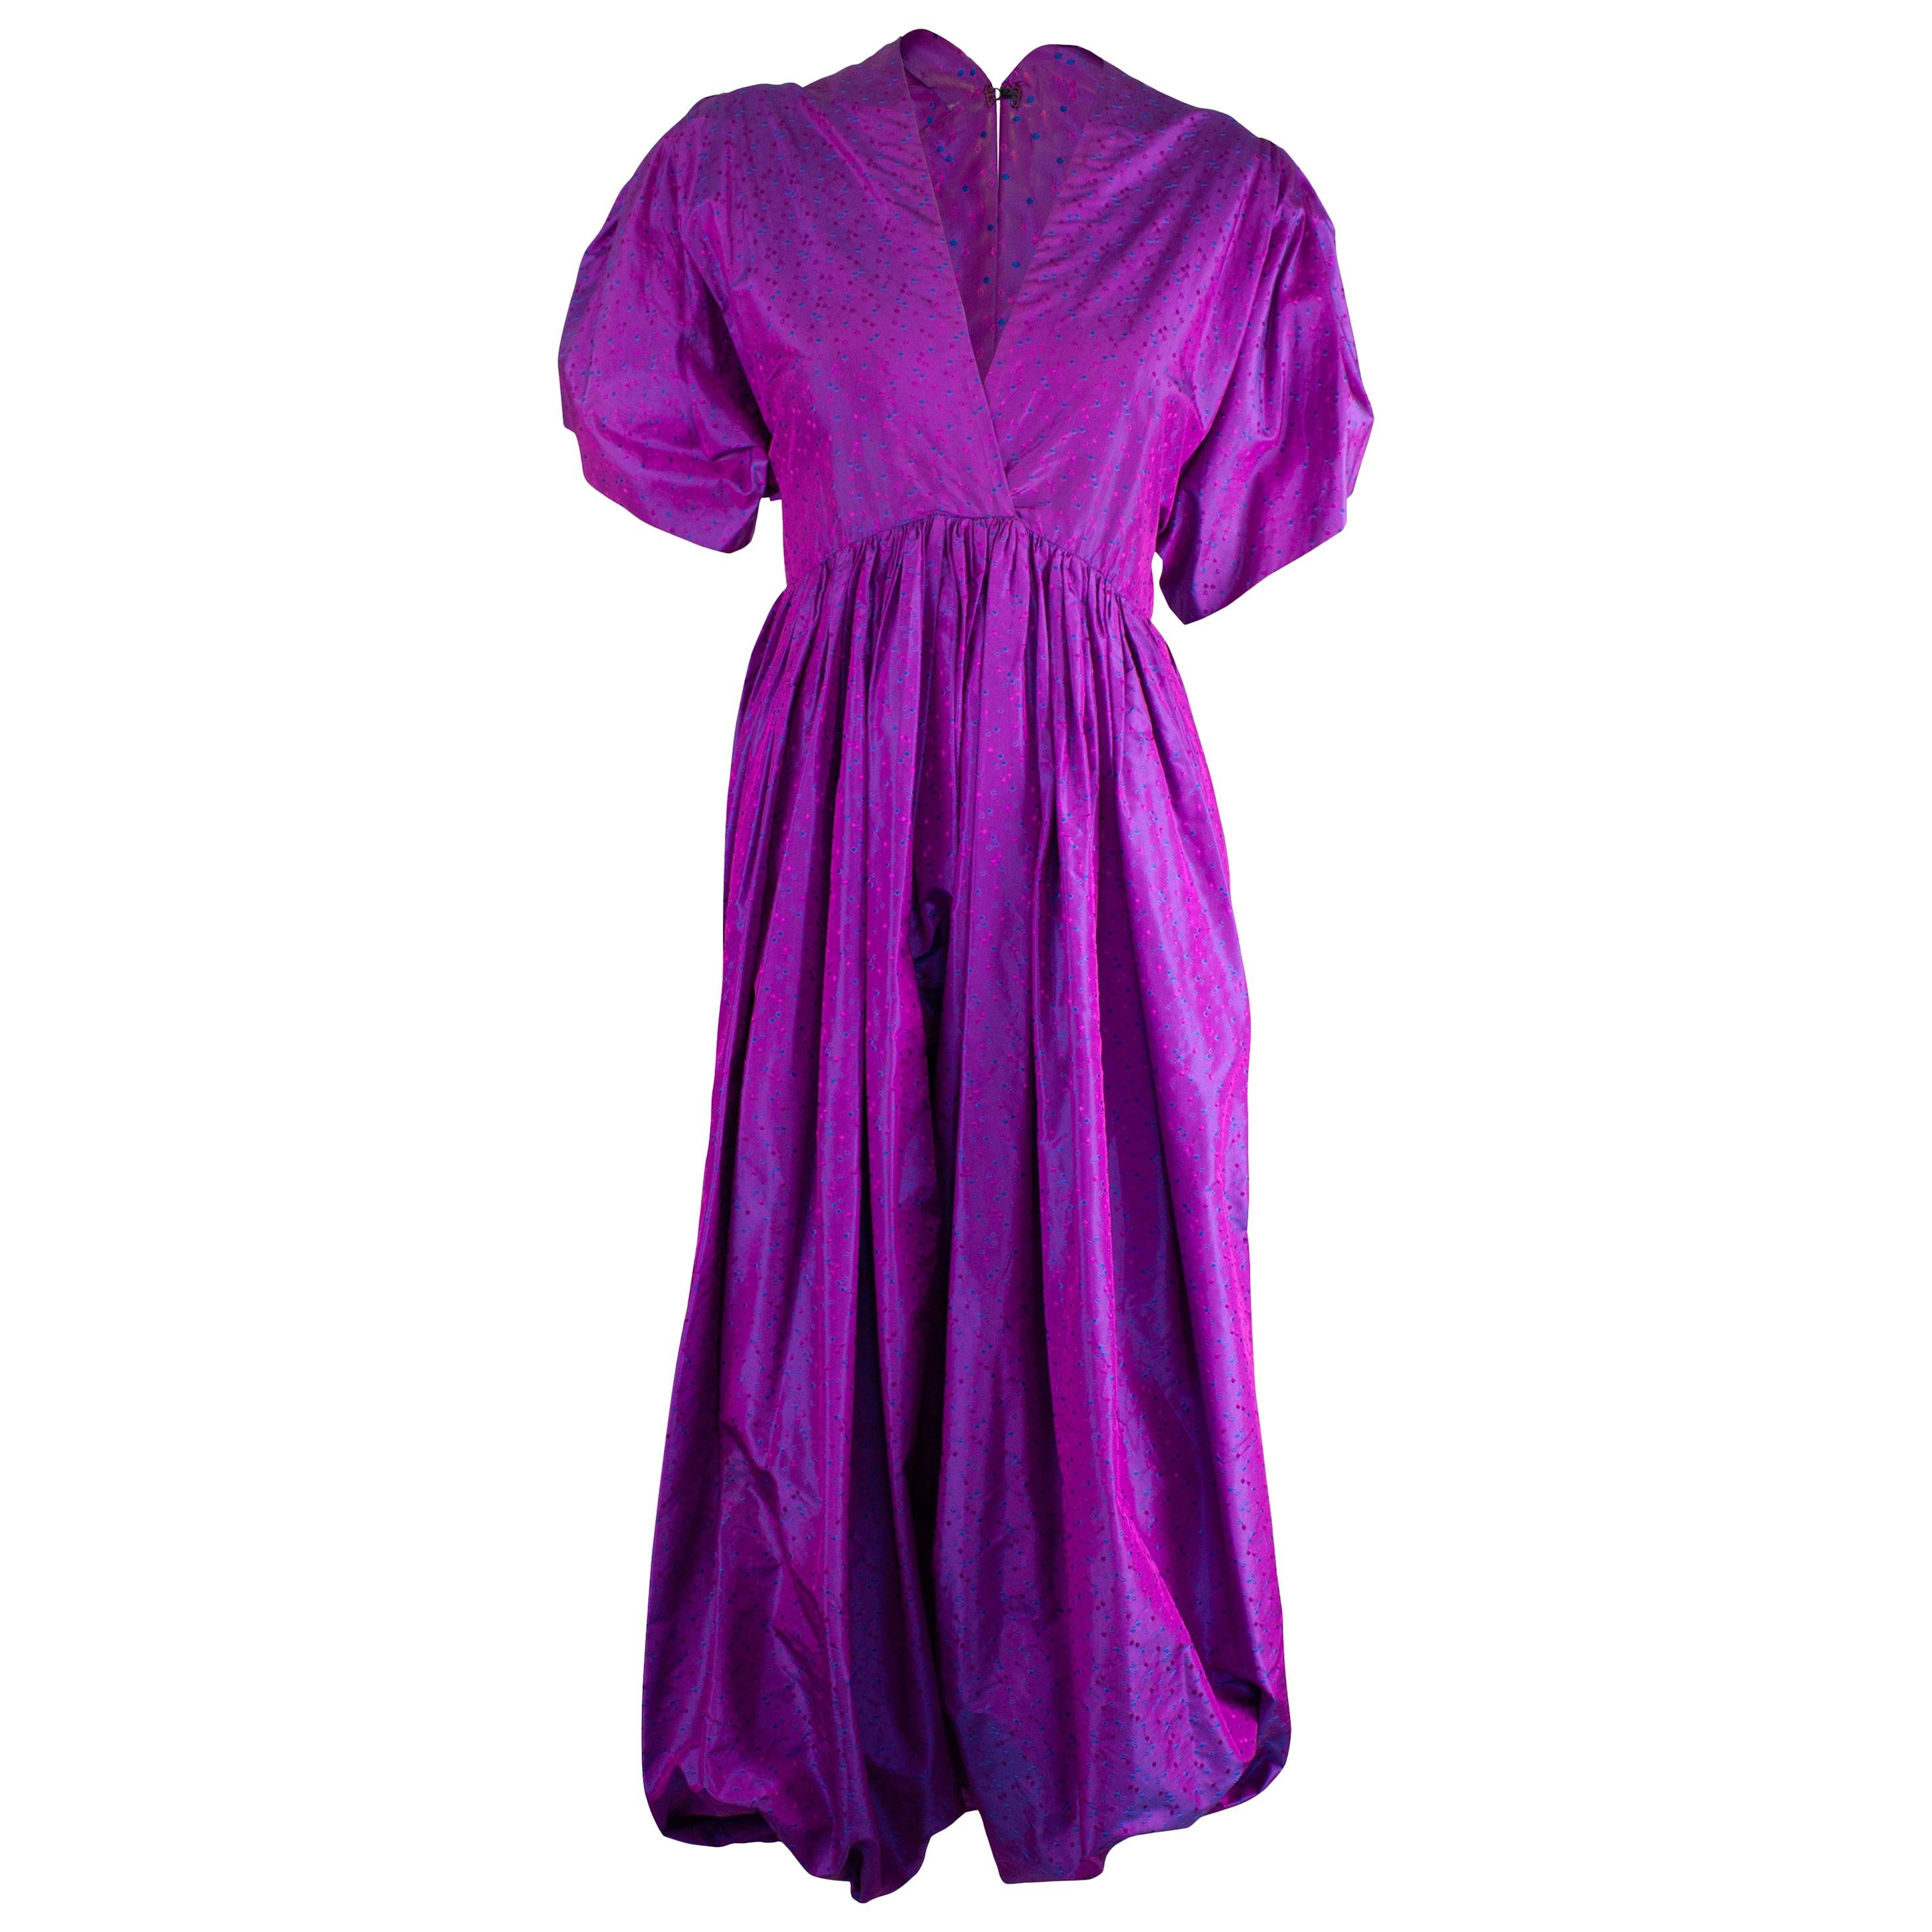 Unlabelled  Madame Grès iridescent lilac silk evening jumpsuit  circa 1970s